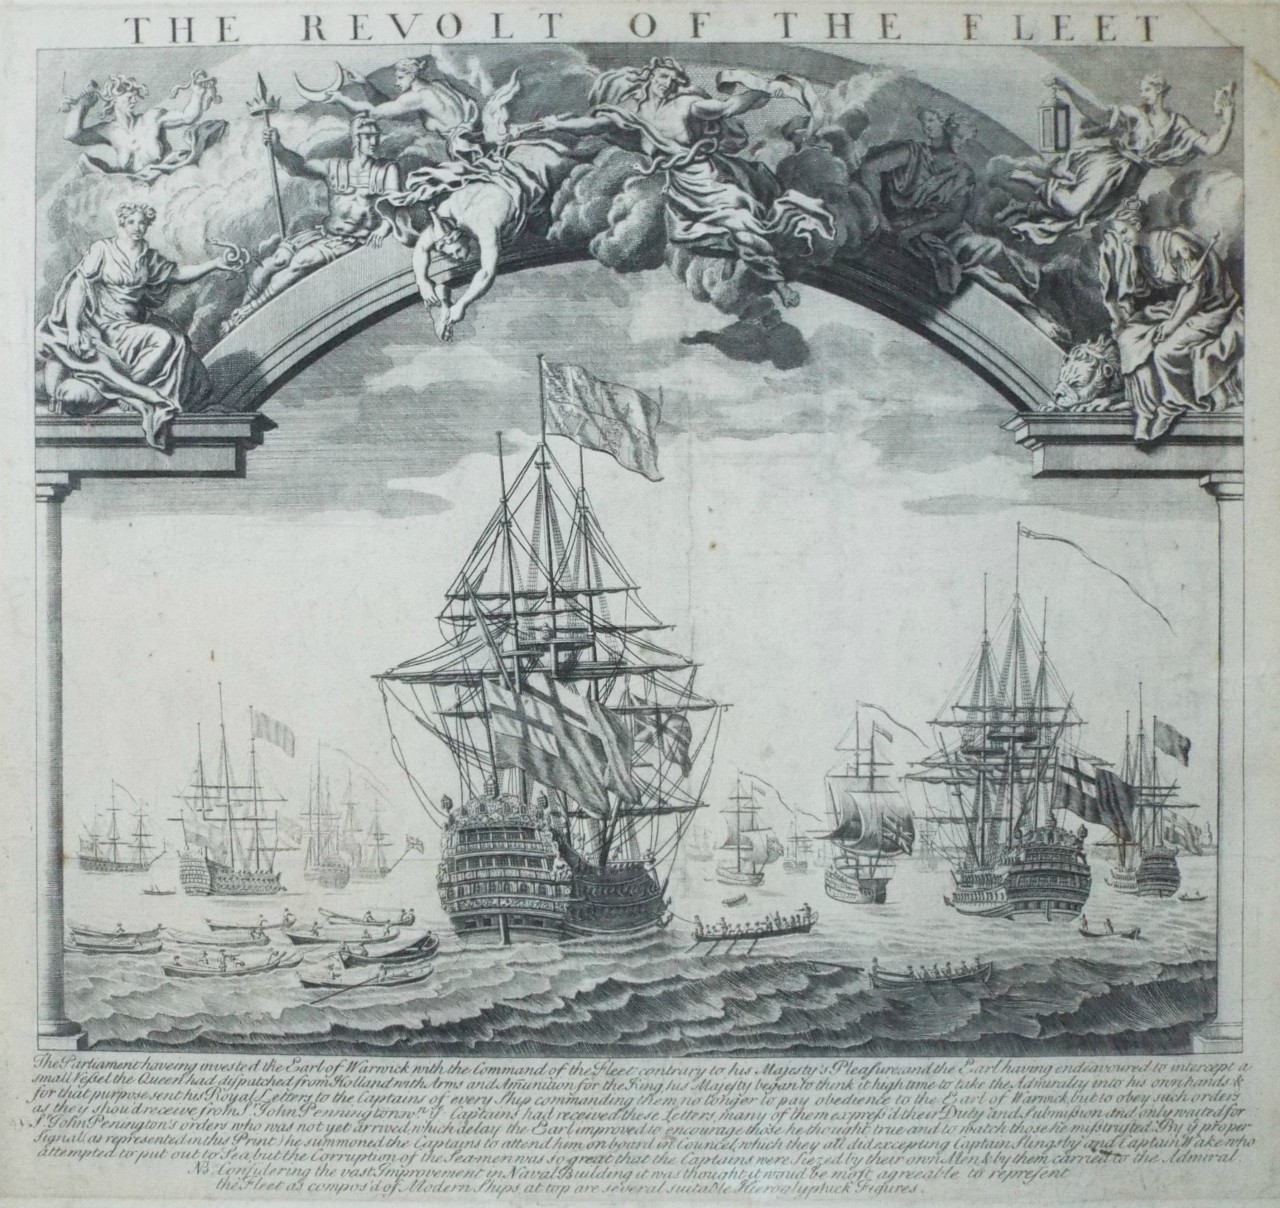 Print - The Revolt of the Fleet - Harris